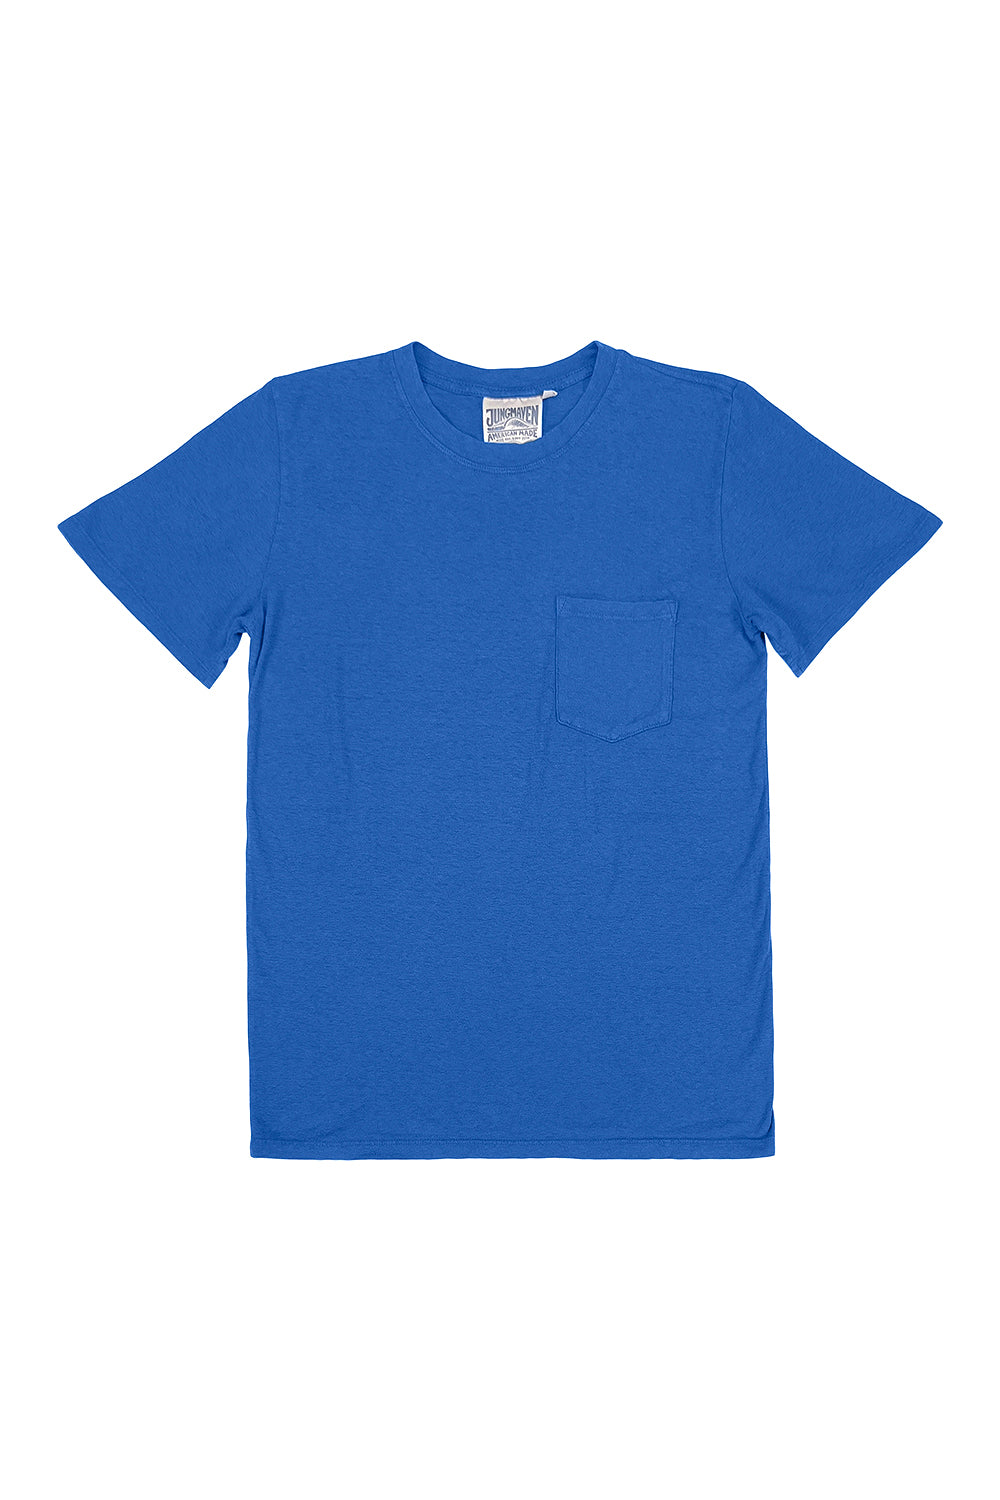 Jung Pocket Tee | Jungmaven Hemp Clothing & Accessories / Color: Galaxy Blue